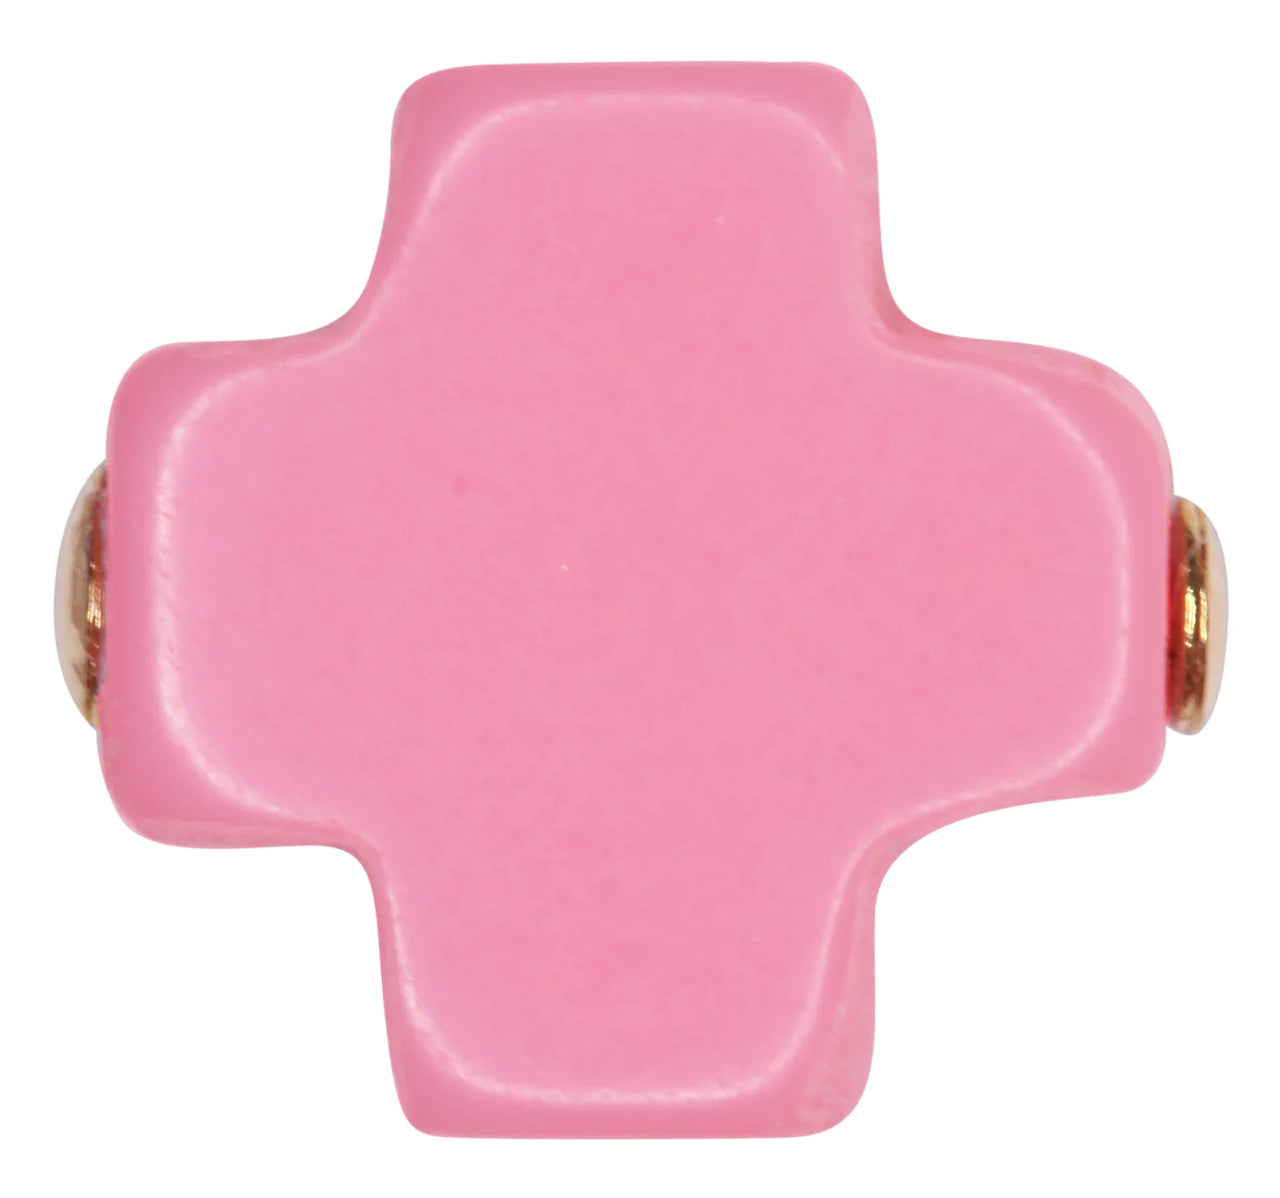 egirl signature cross bracelet gold-bright pink